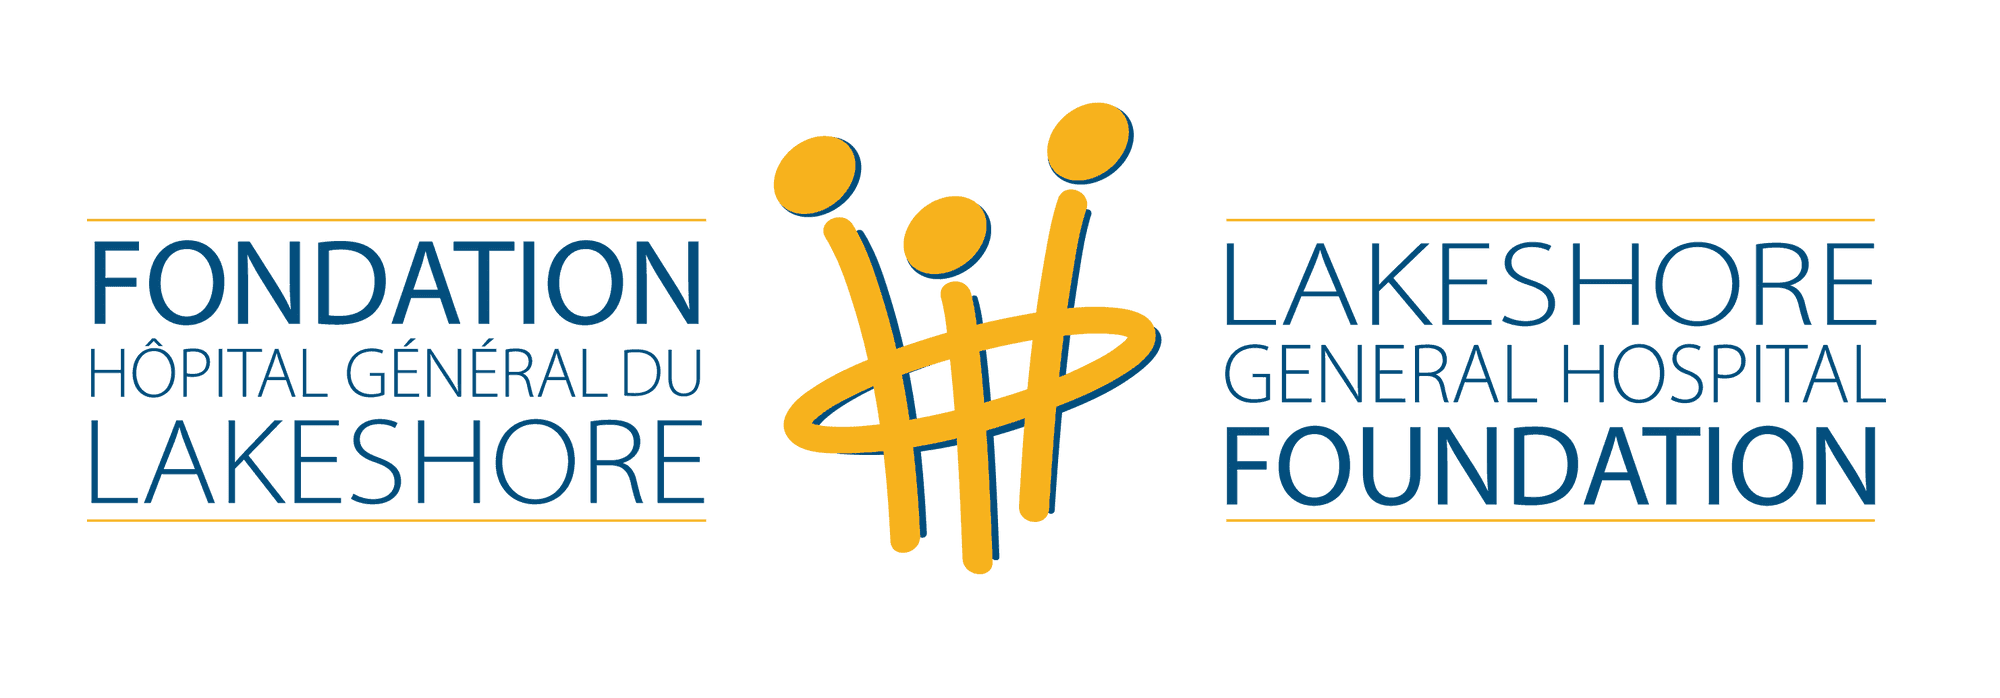 Lakeshore General Hospital Foundation